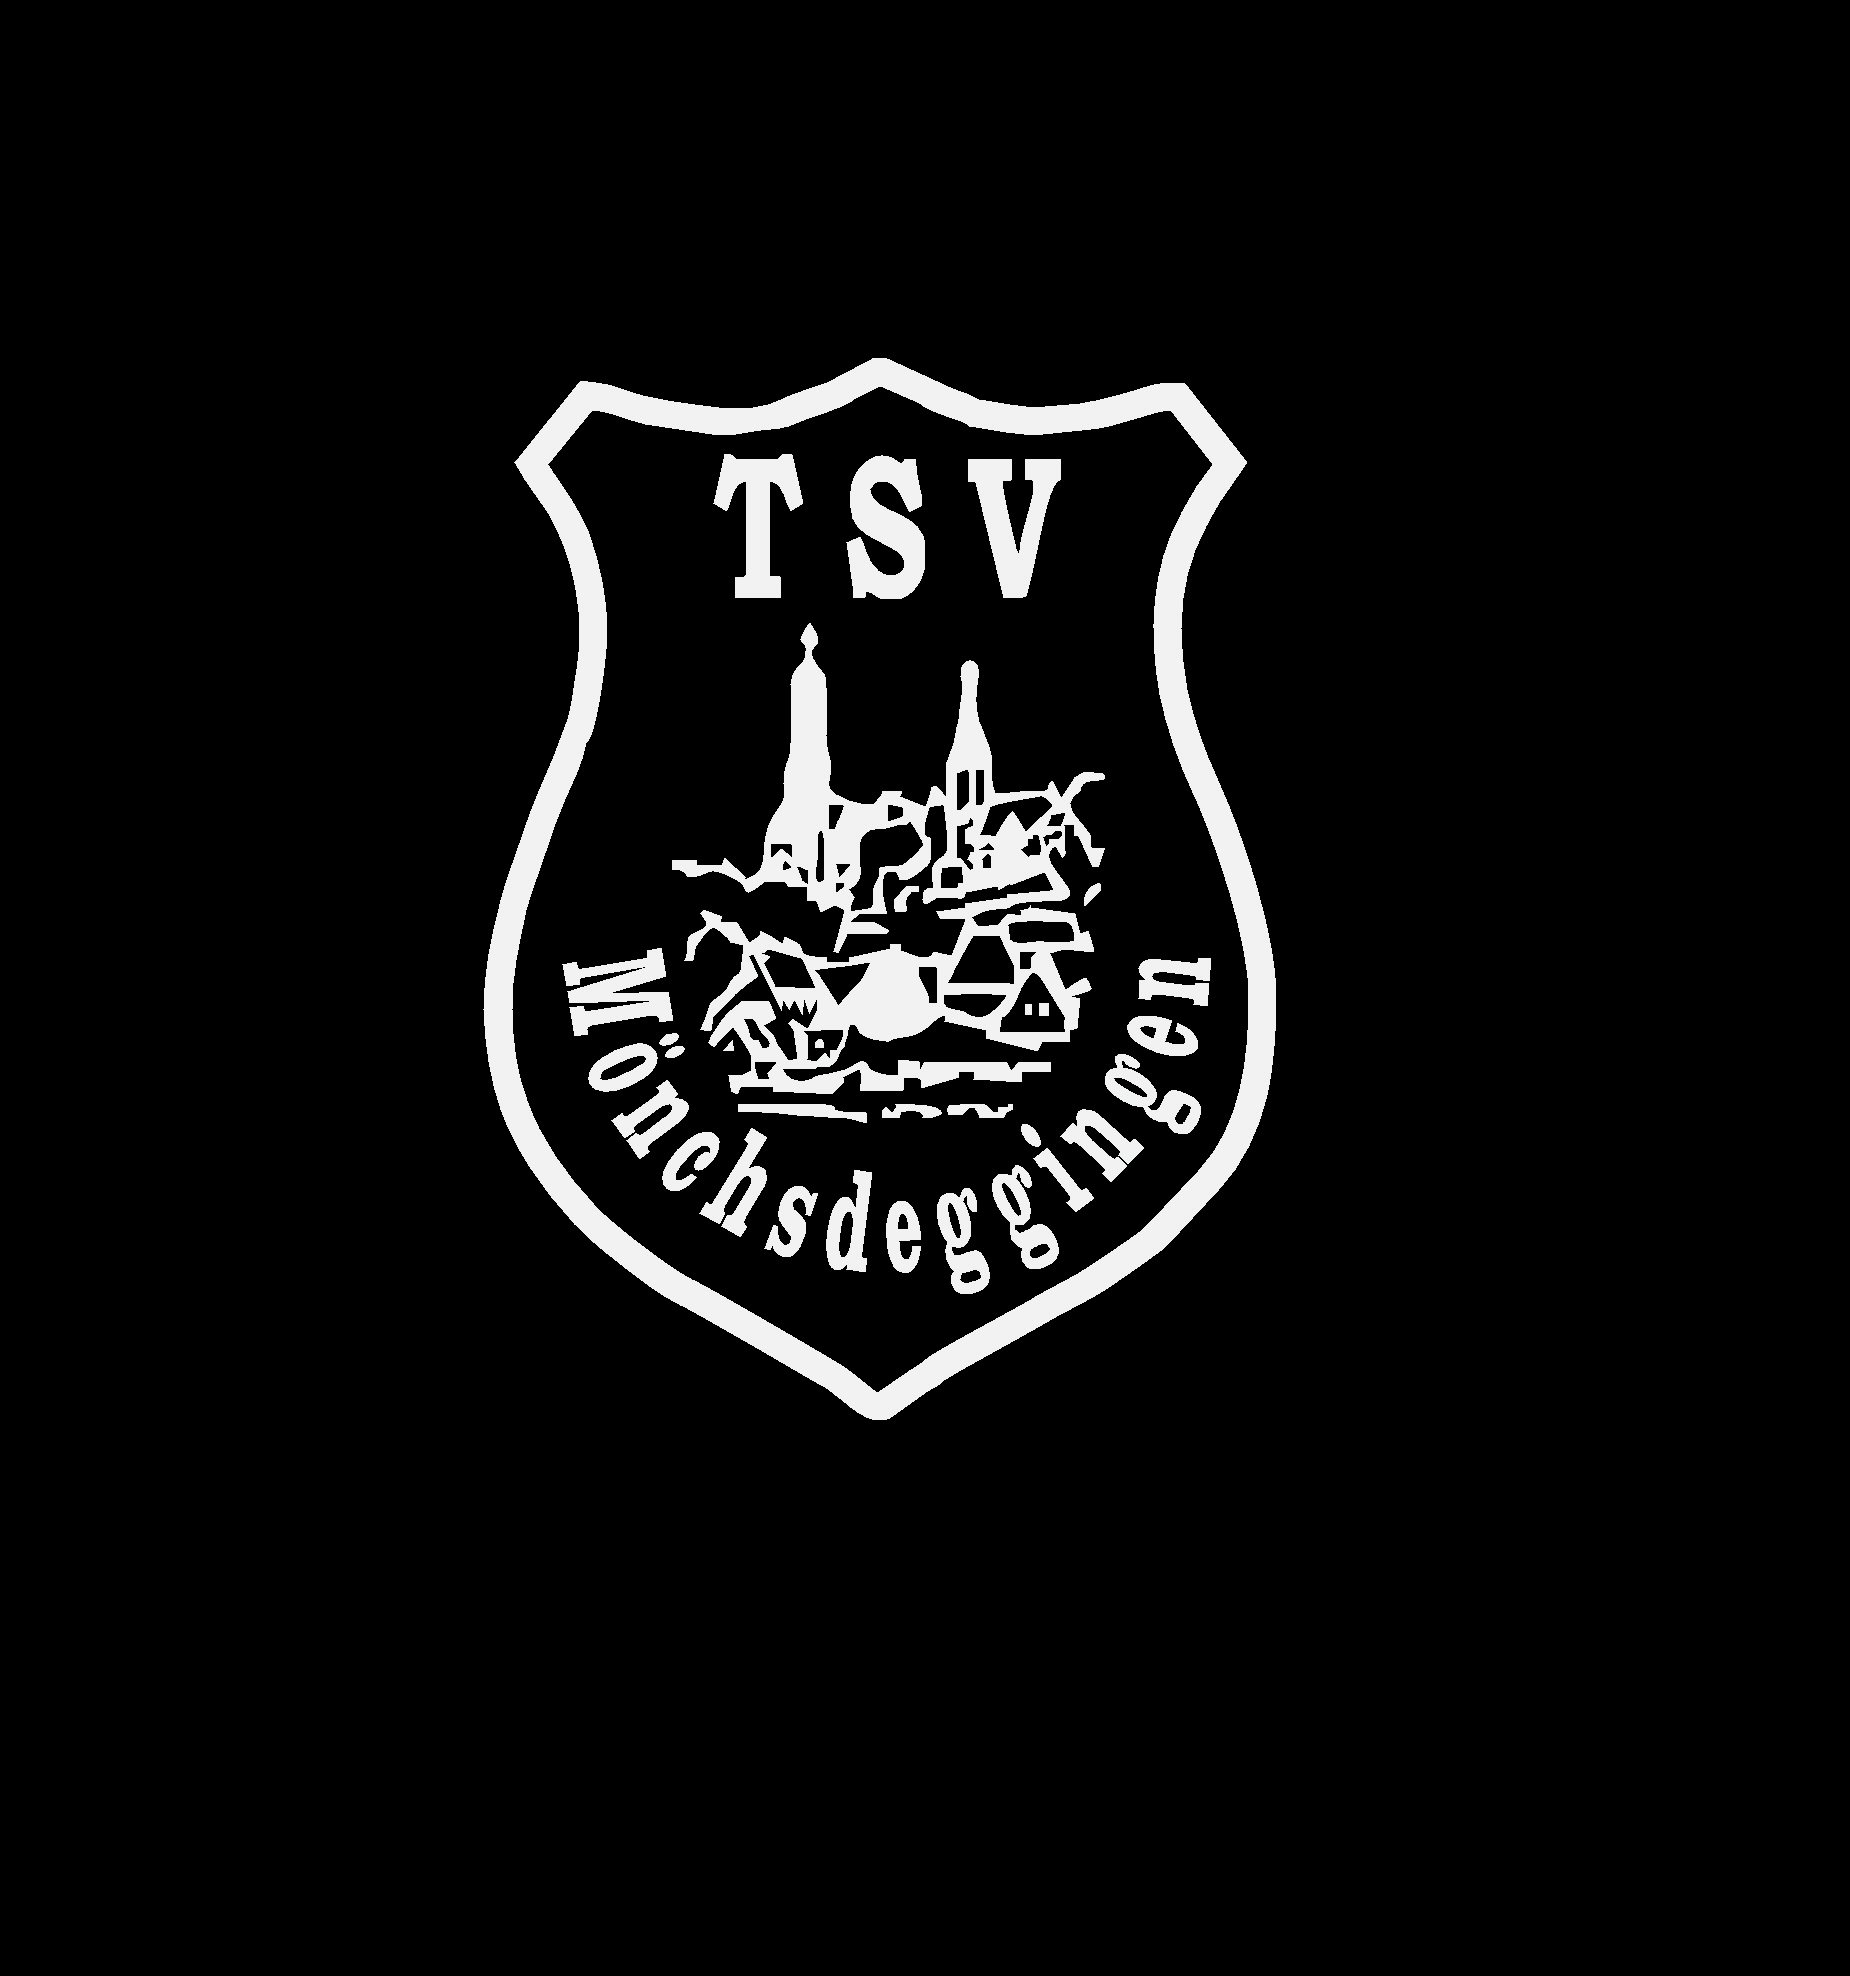 TSV Mönchsdeggingen Logo